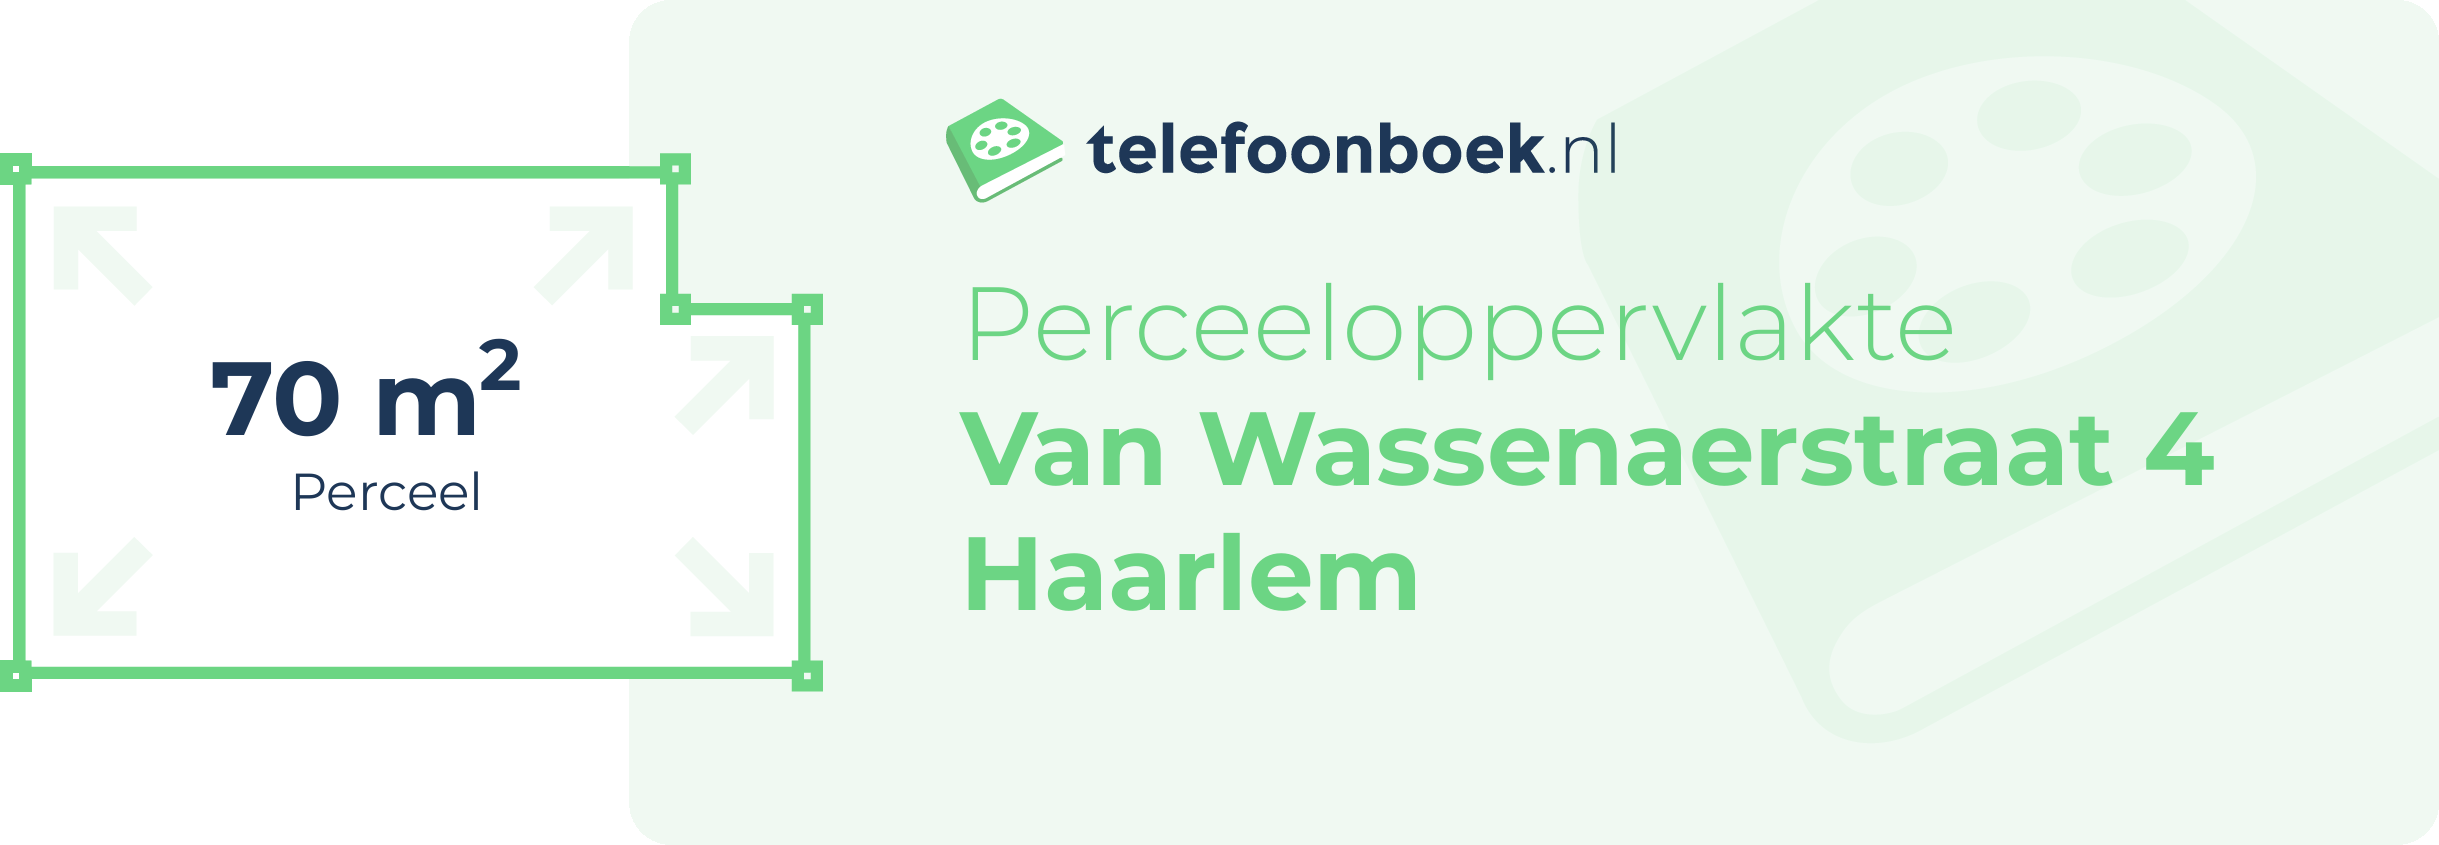 Perceeloppervlakte Van Wassenaerstraat 4 Haarlem